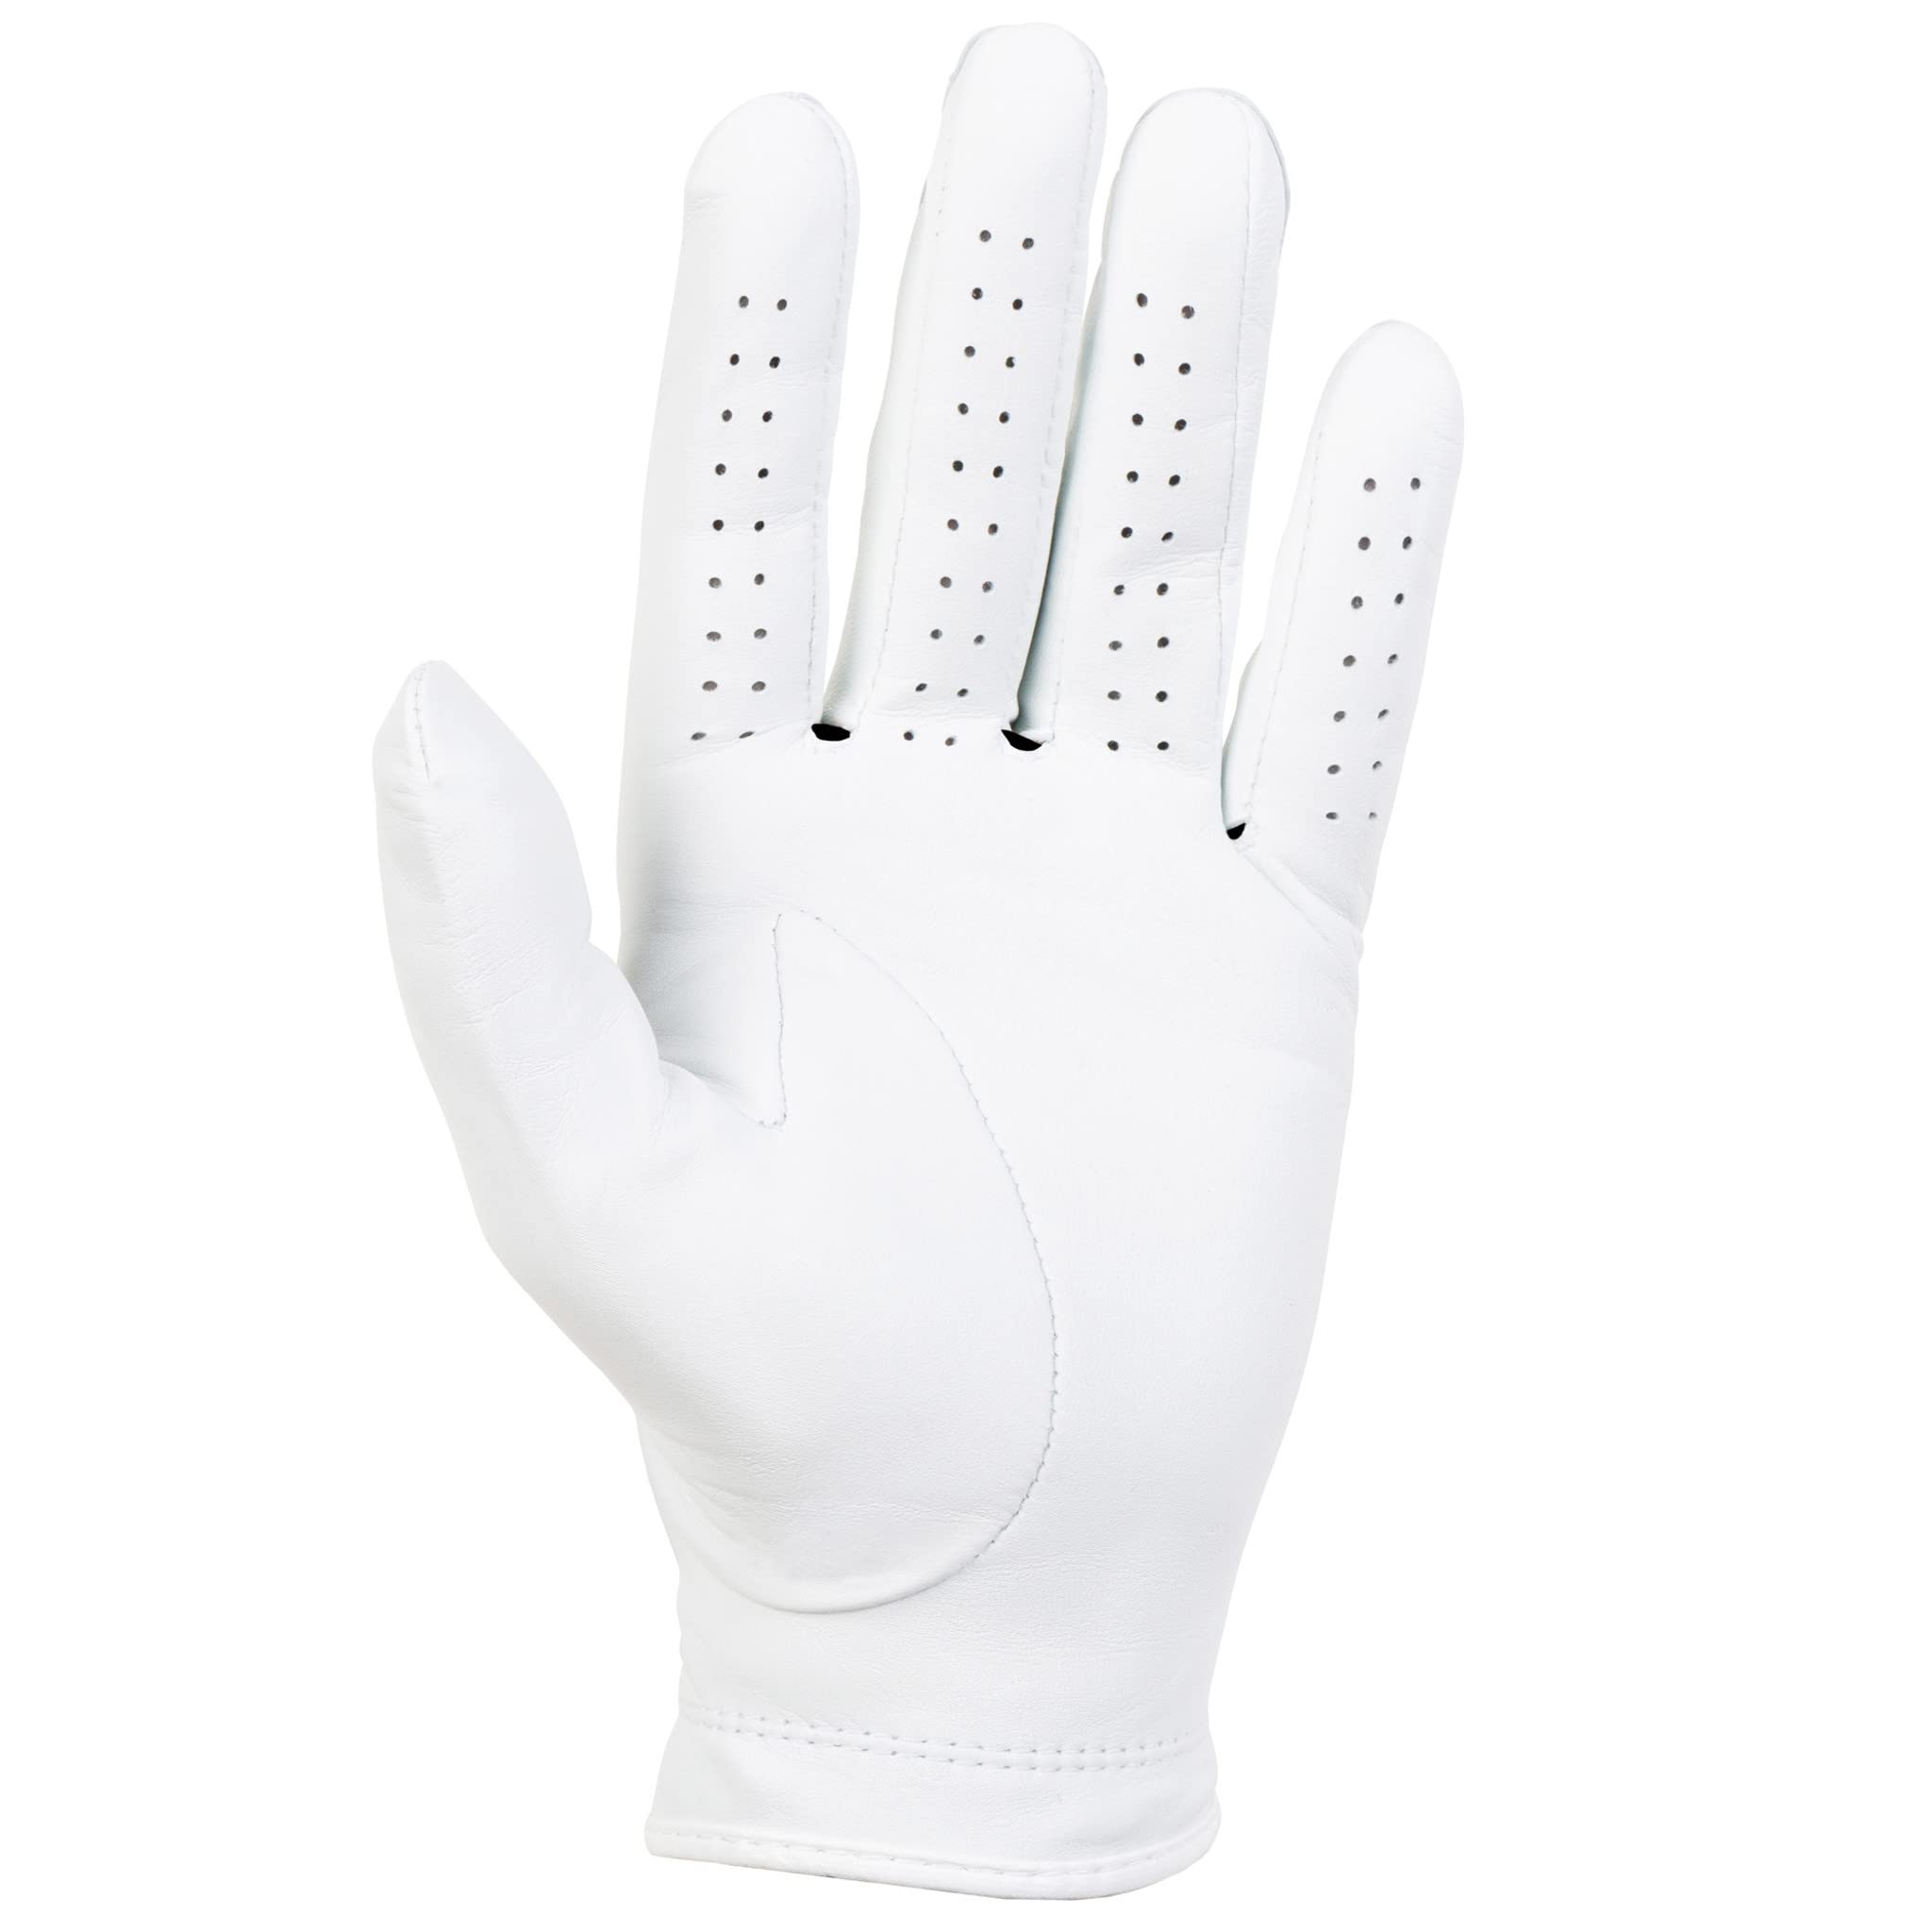 TITLEIST Players Glove Men's, White, L